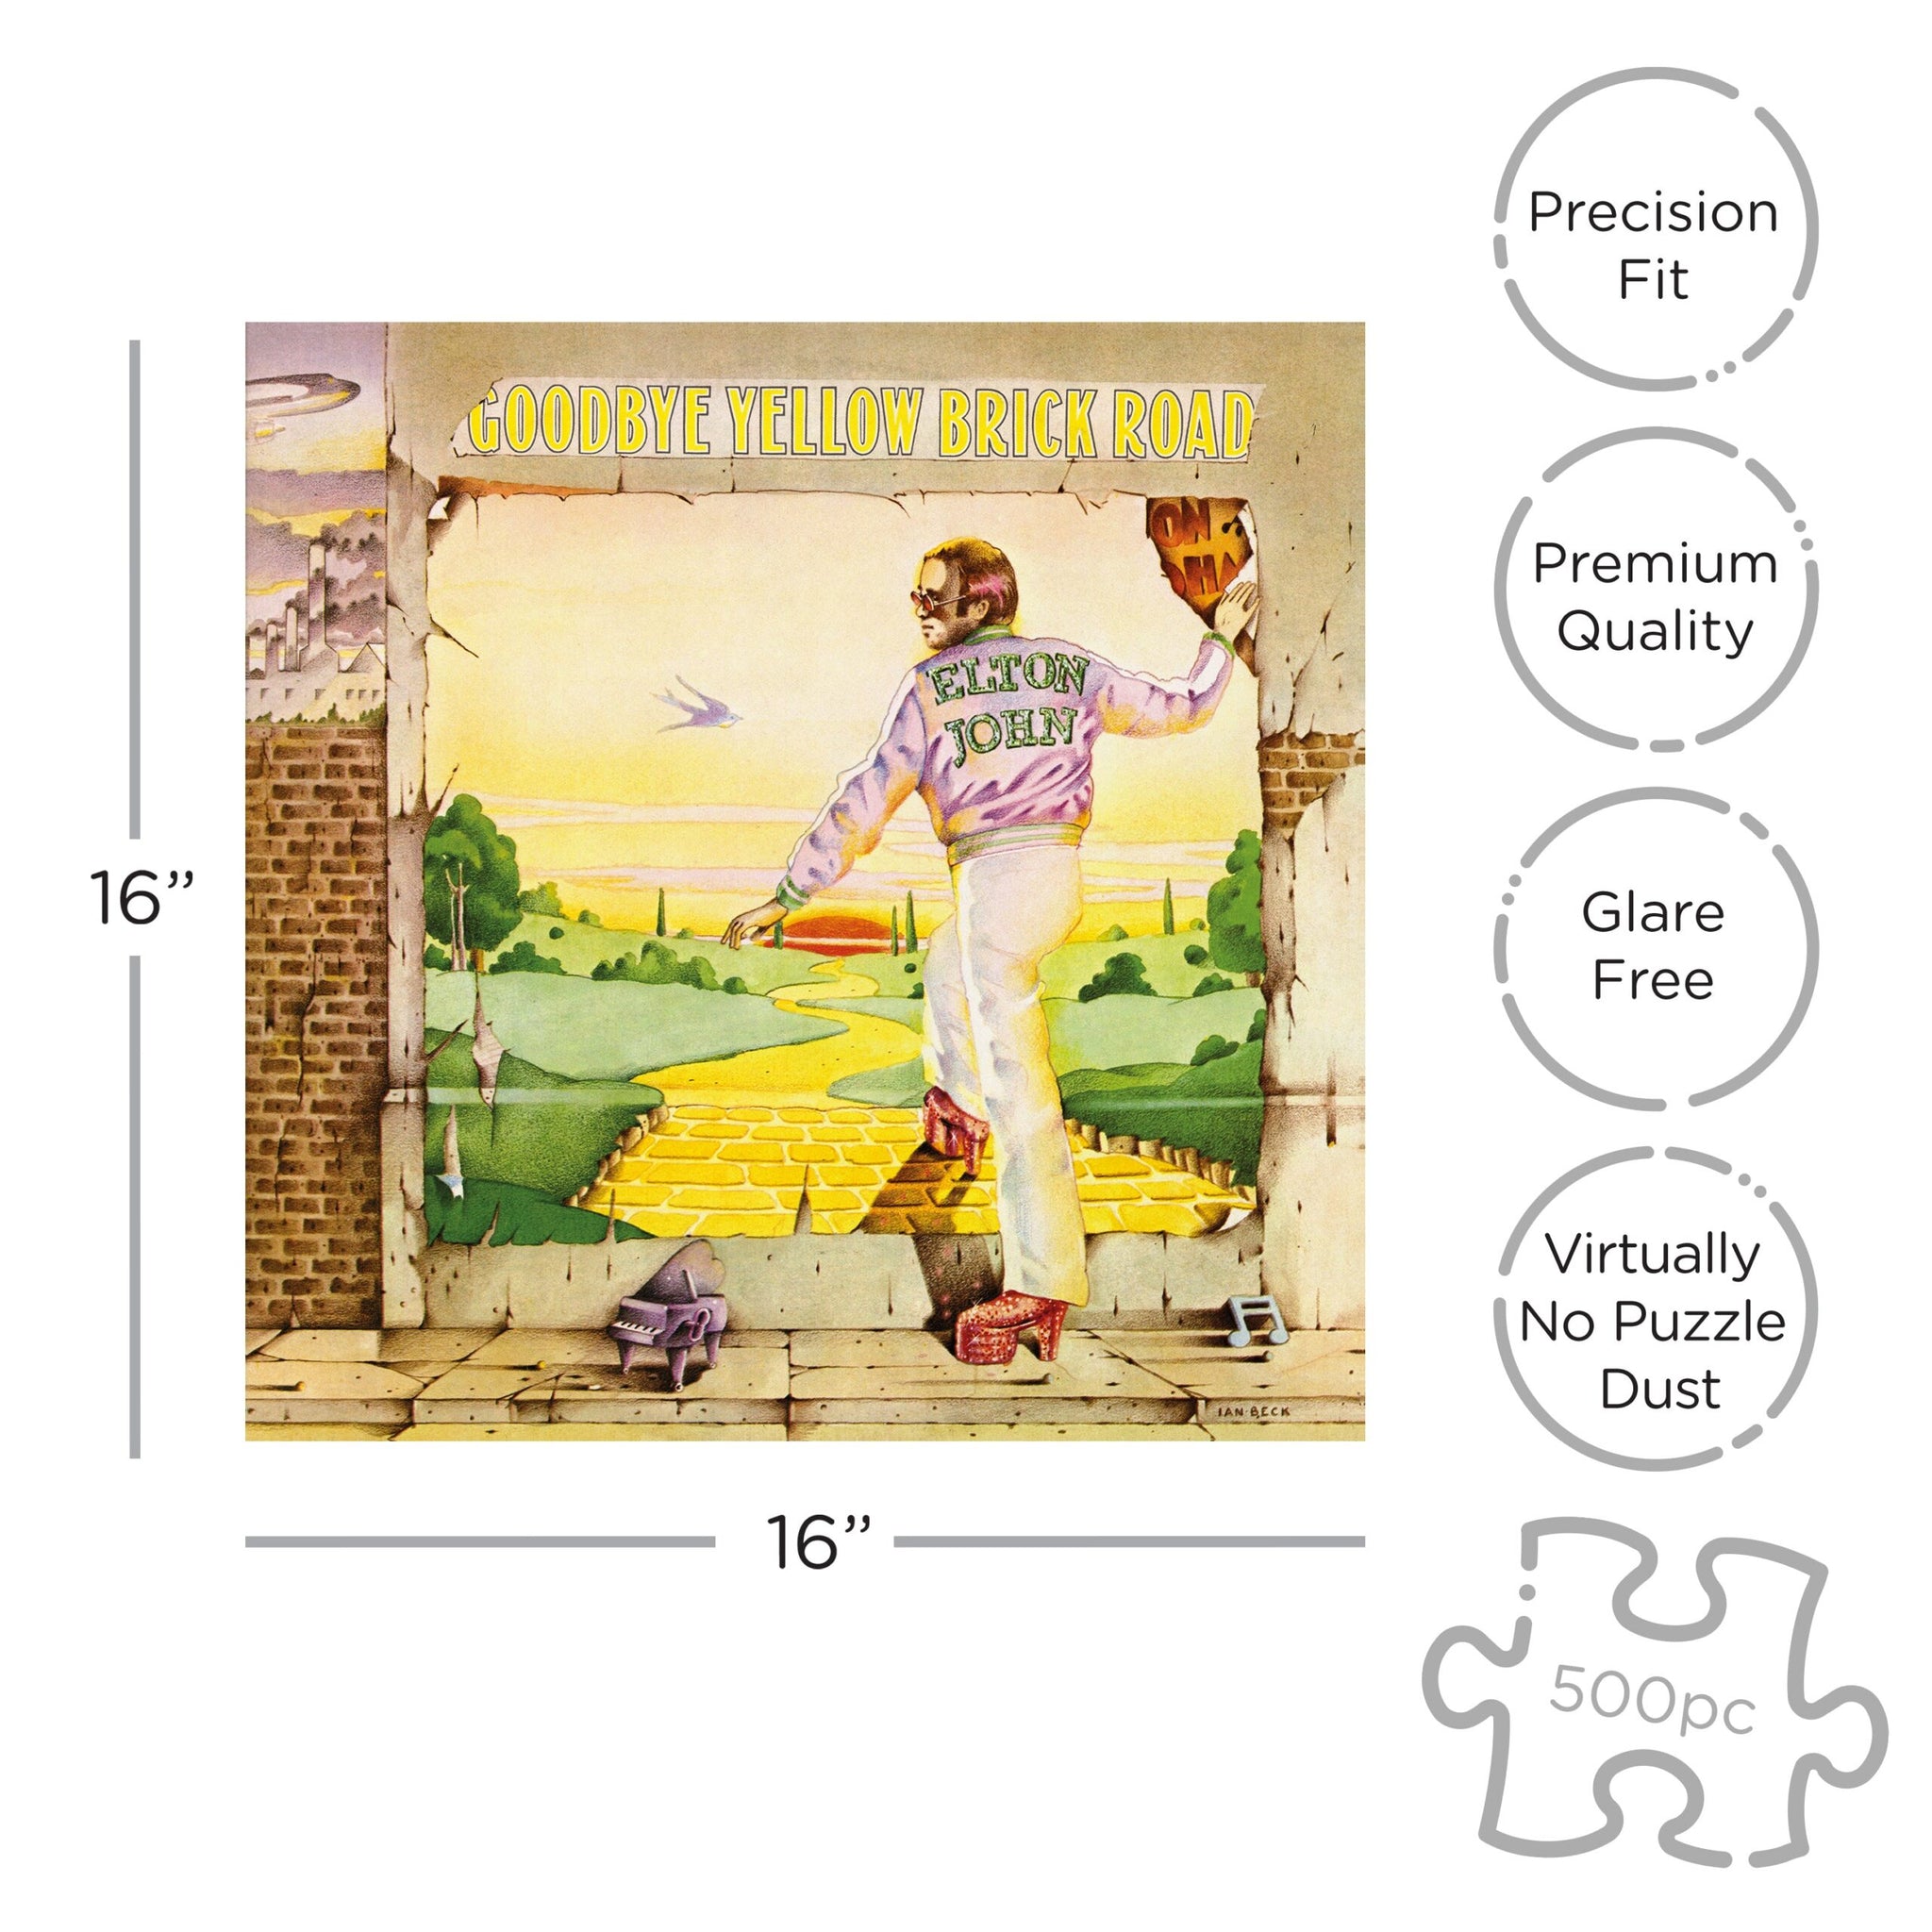 Elton John Goodbye Yellow Brick Road Puzzle